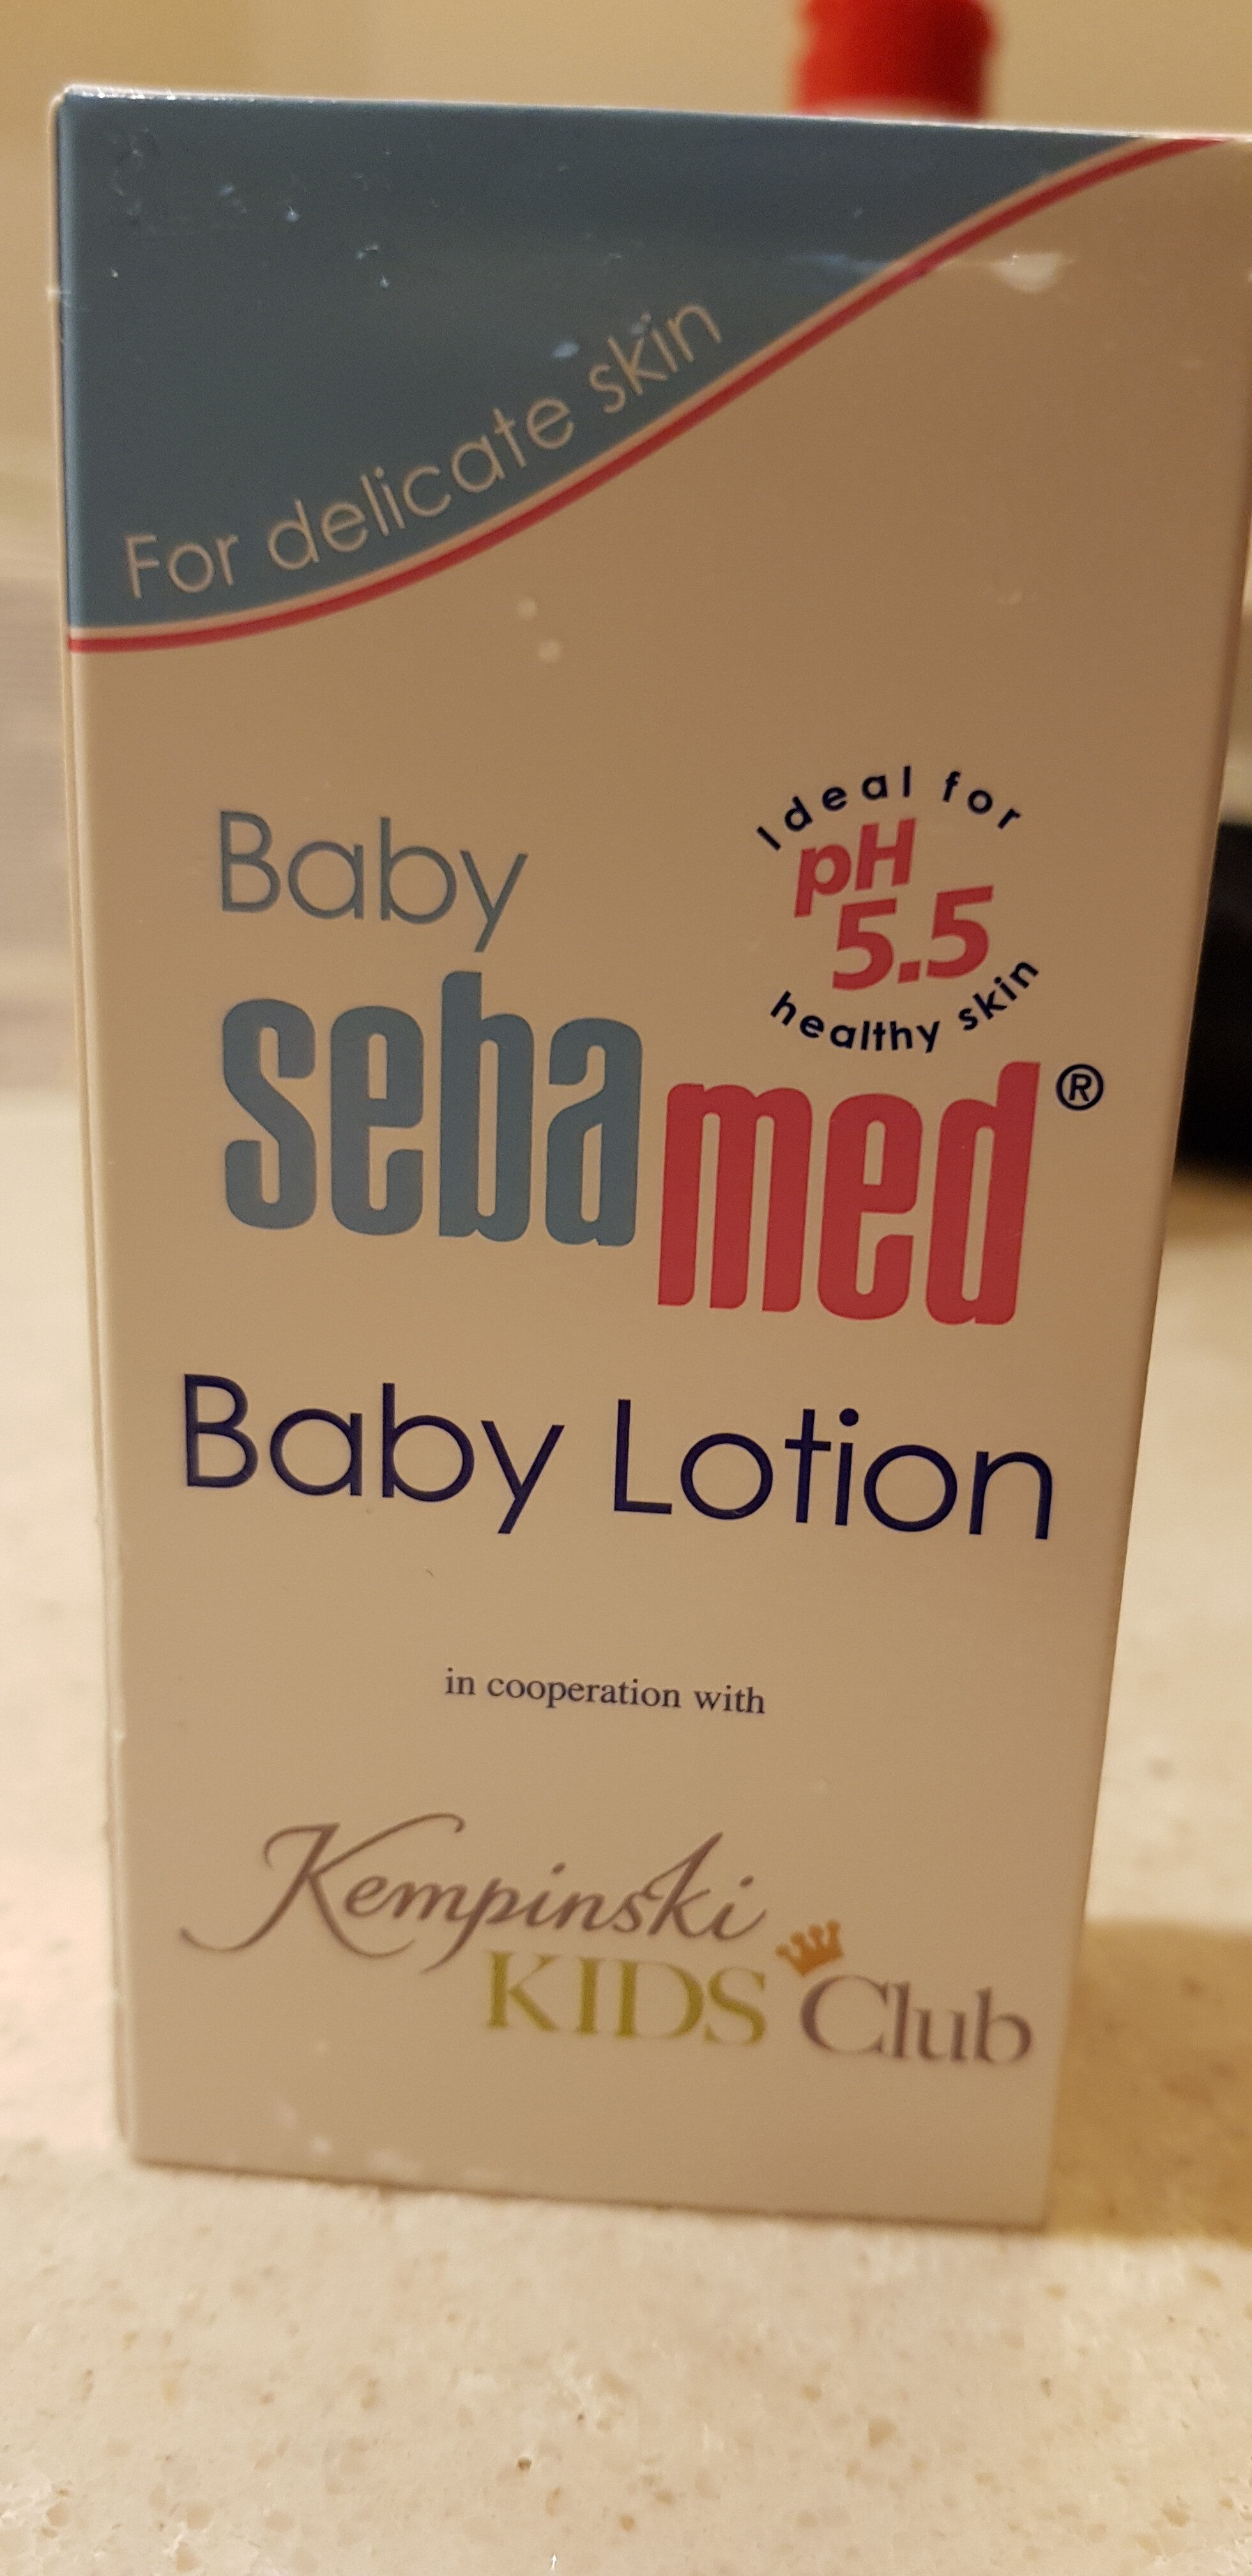 Baby Seba Med Baby Lotion - Produit - fr